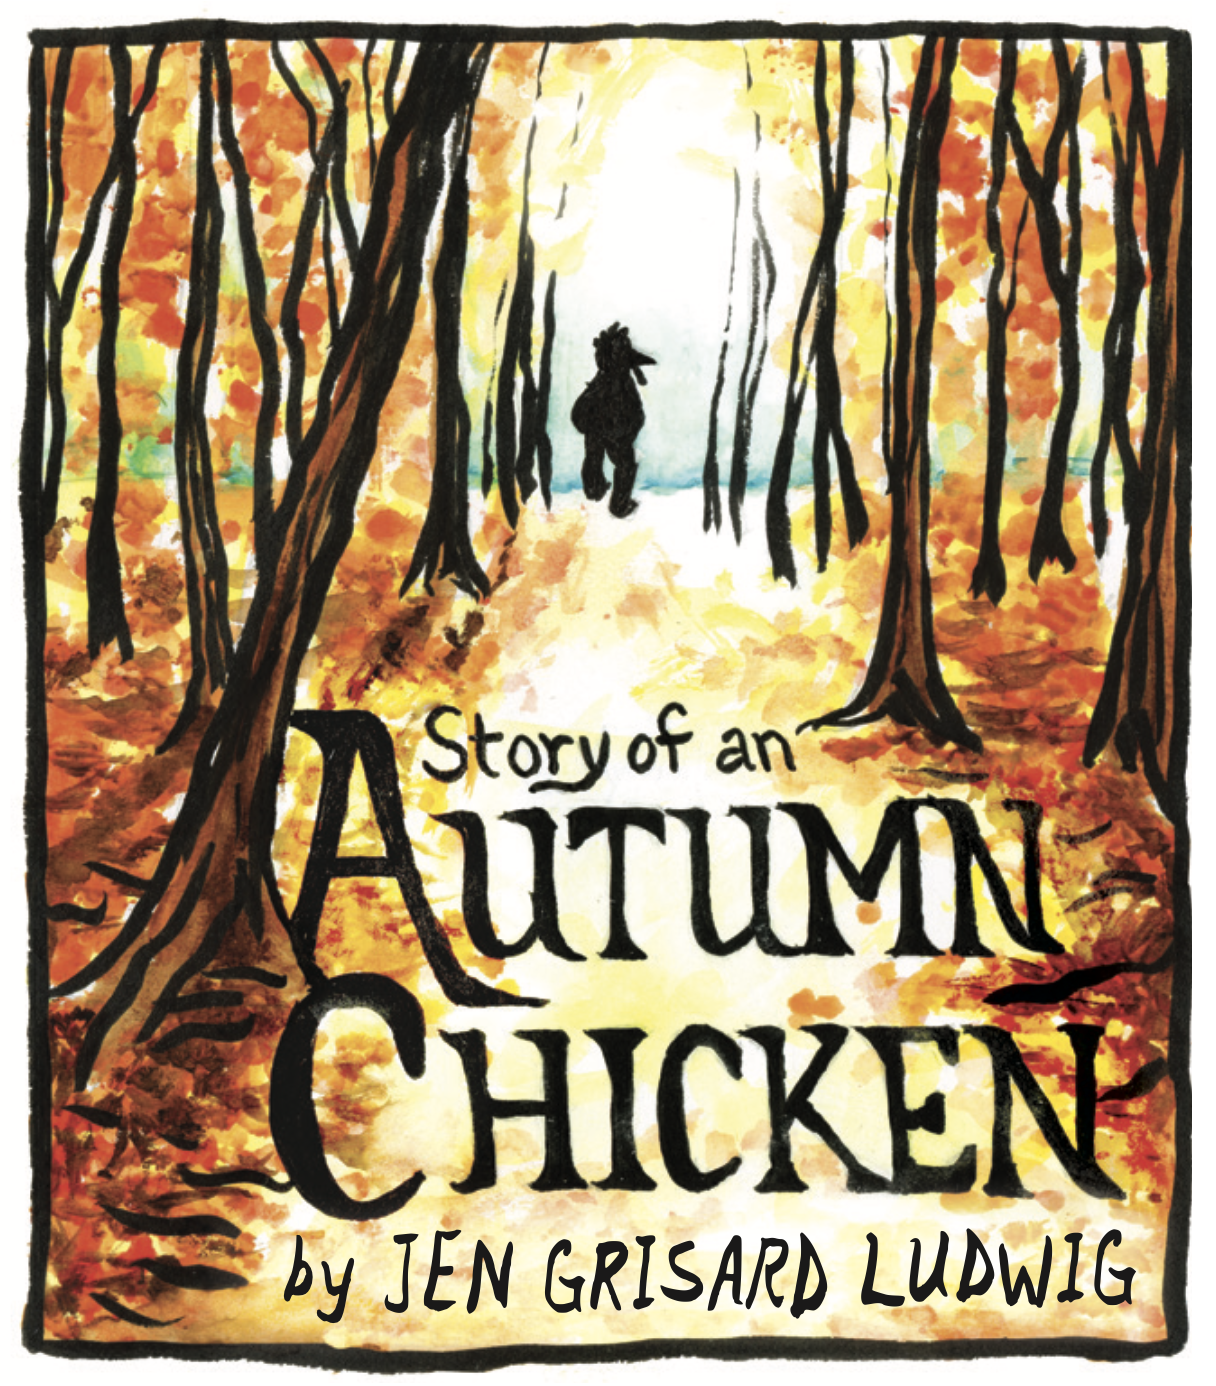 â€œStory of an Autumn Chicken by Jen Grisard Ludwigâ€ A forest covered in autumn leaves, with the silhouette of an anthropomorphic chicken in the background. 